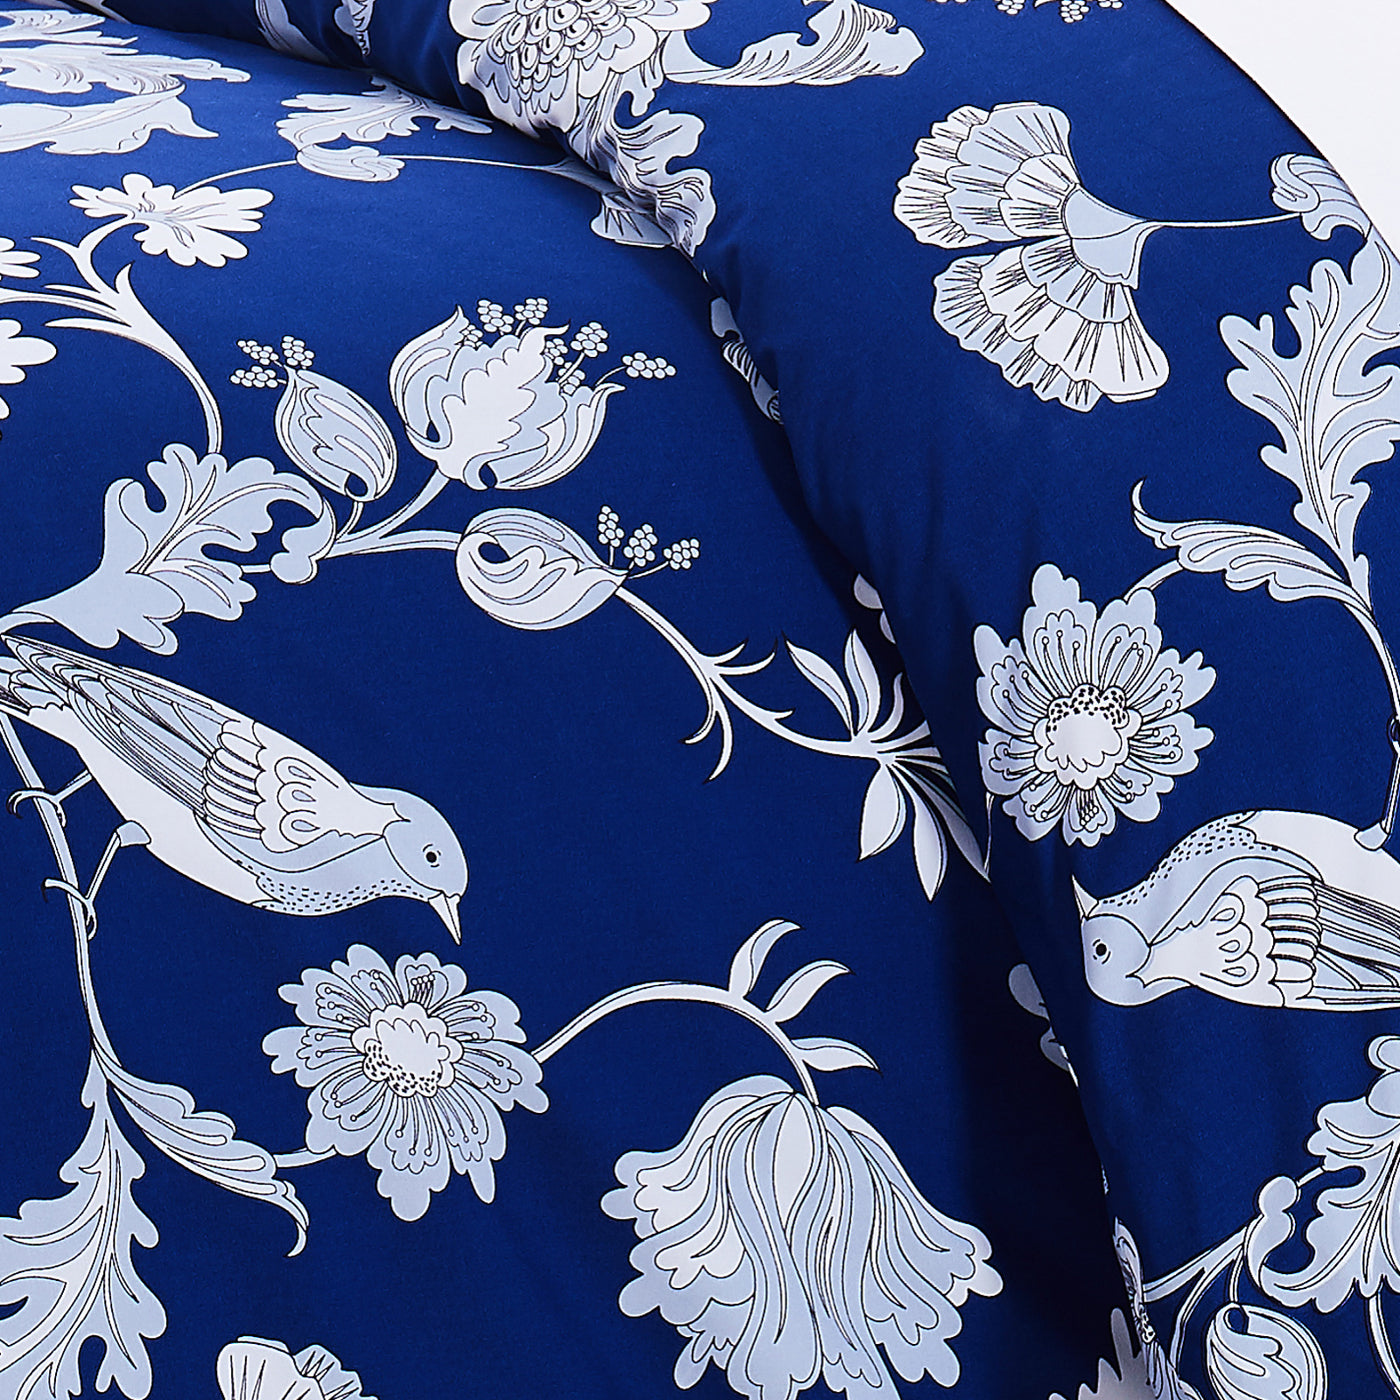 Blue Afternoon Comforter Set in Blue